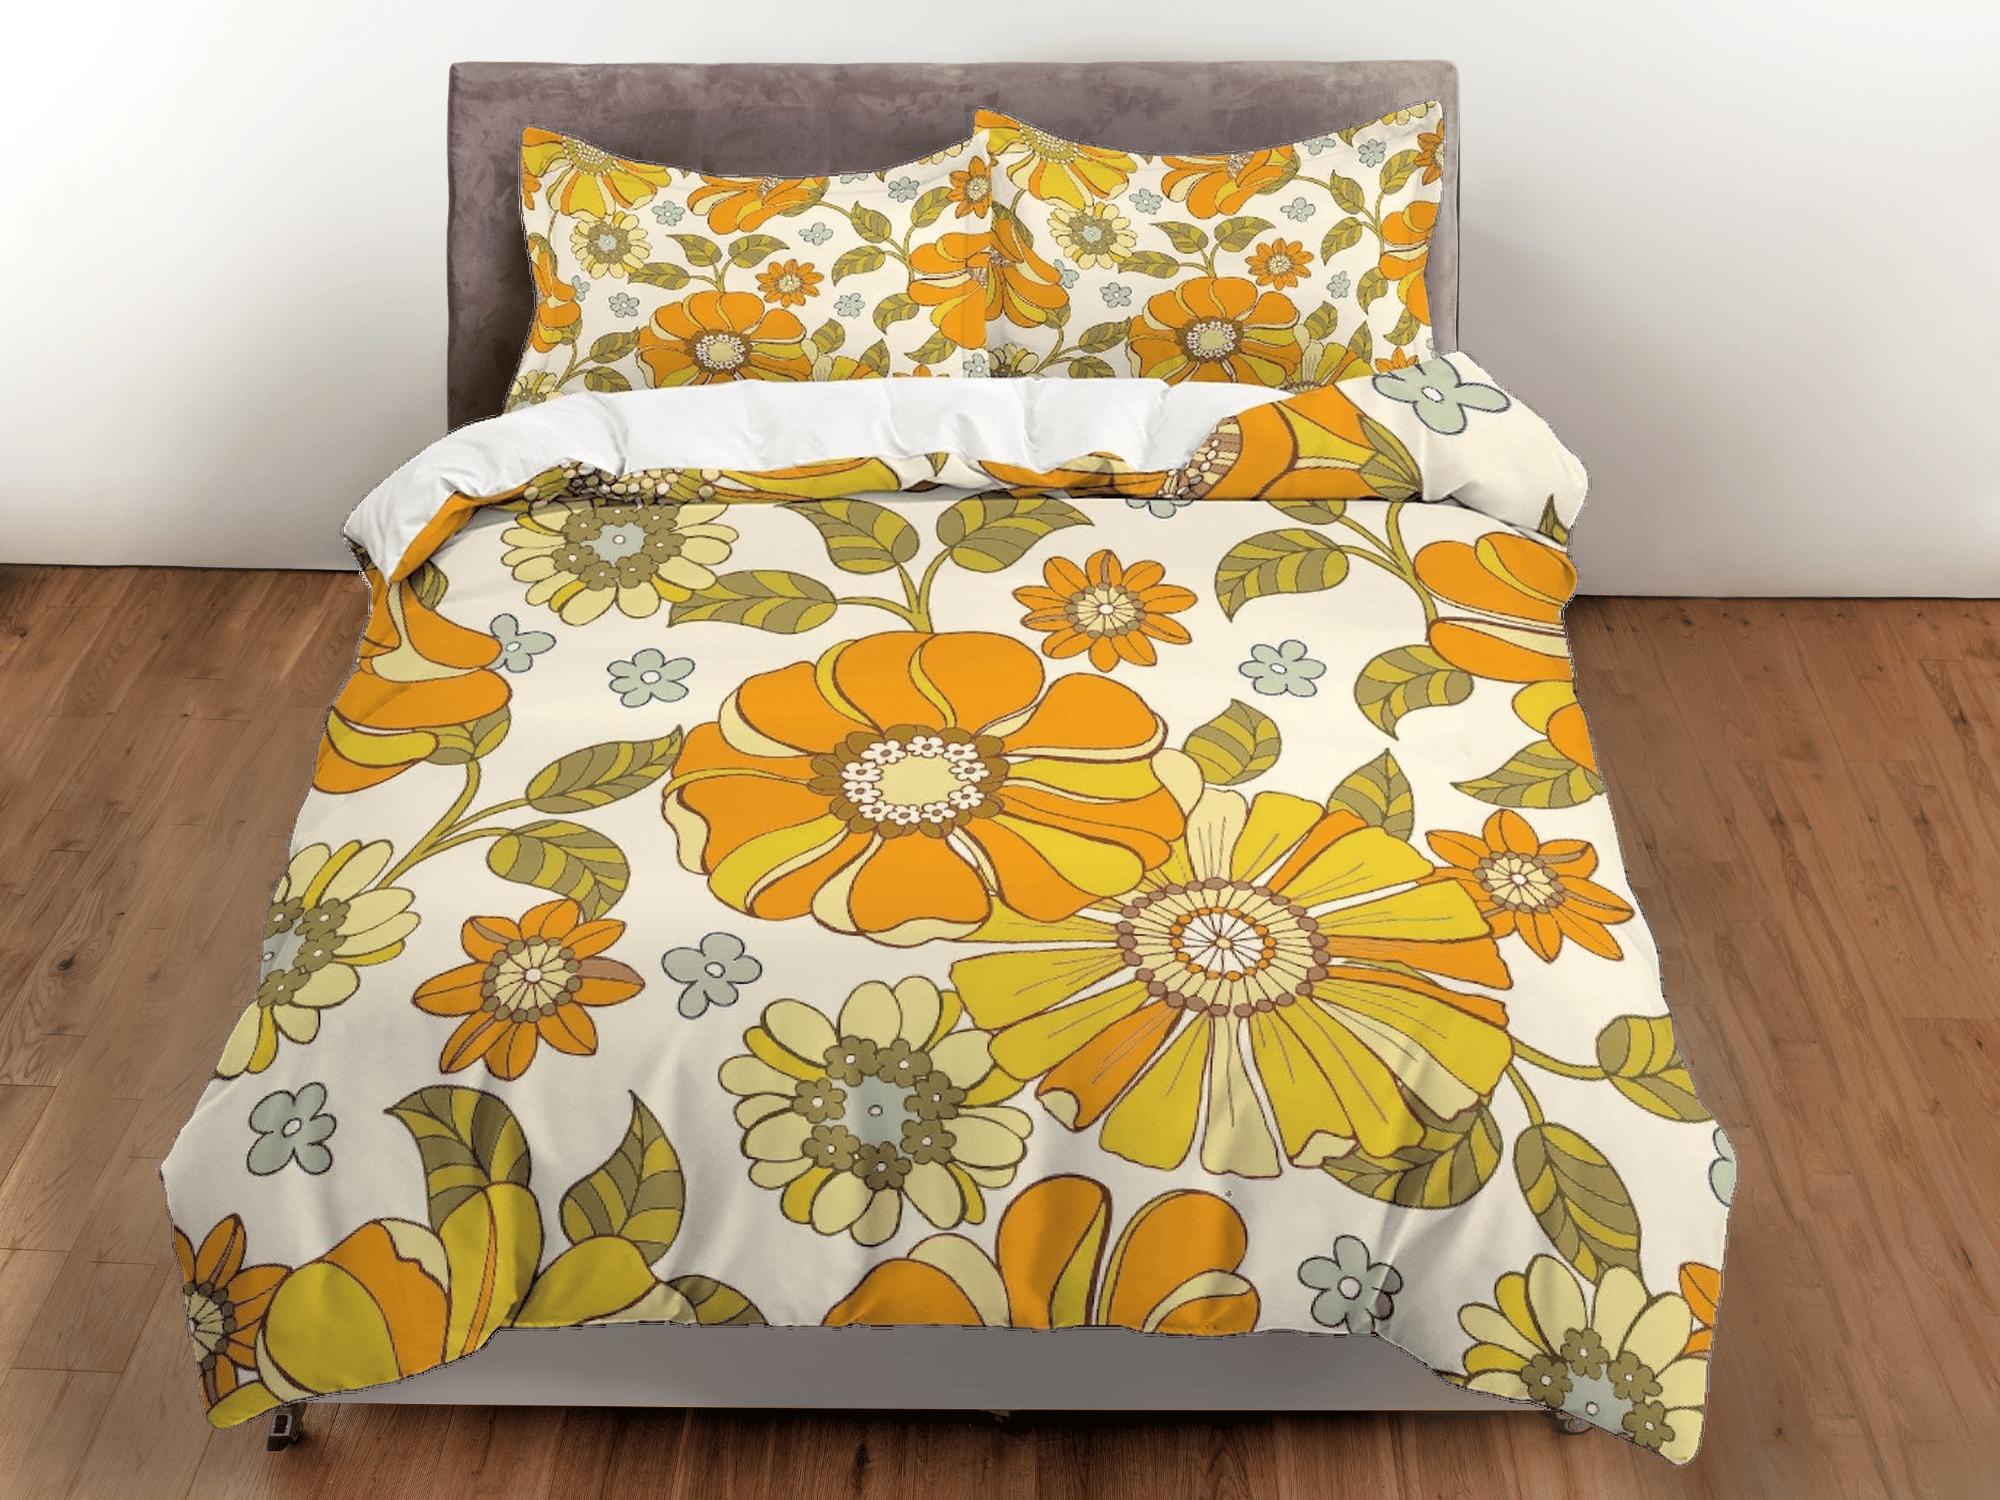 daintyduvet Mid century modern bedding orange floral duvet cover colorful retro bedding, vintage style boho maximalist bedspread aesthetic bedding daisy